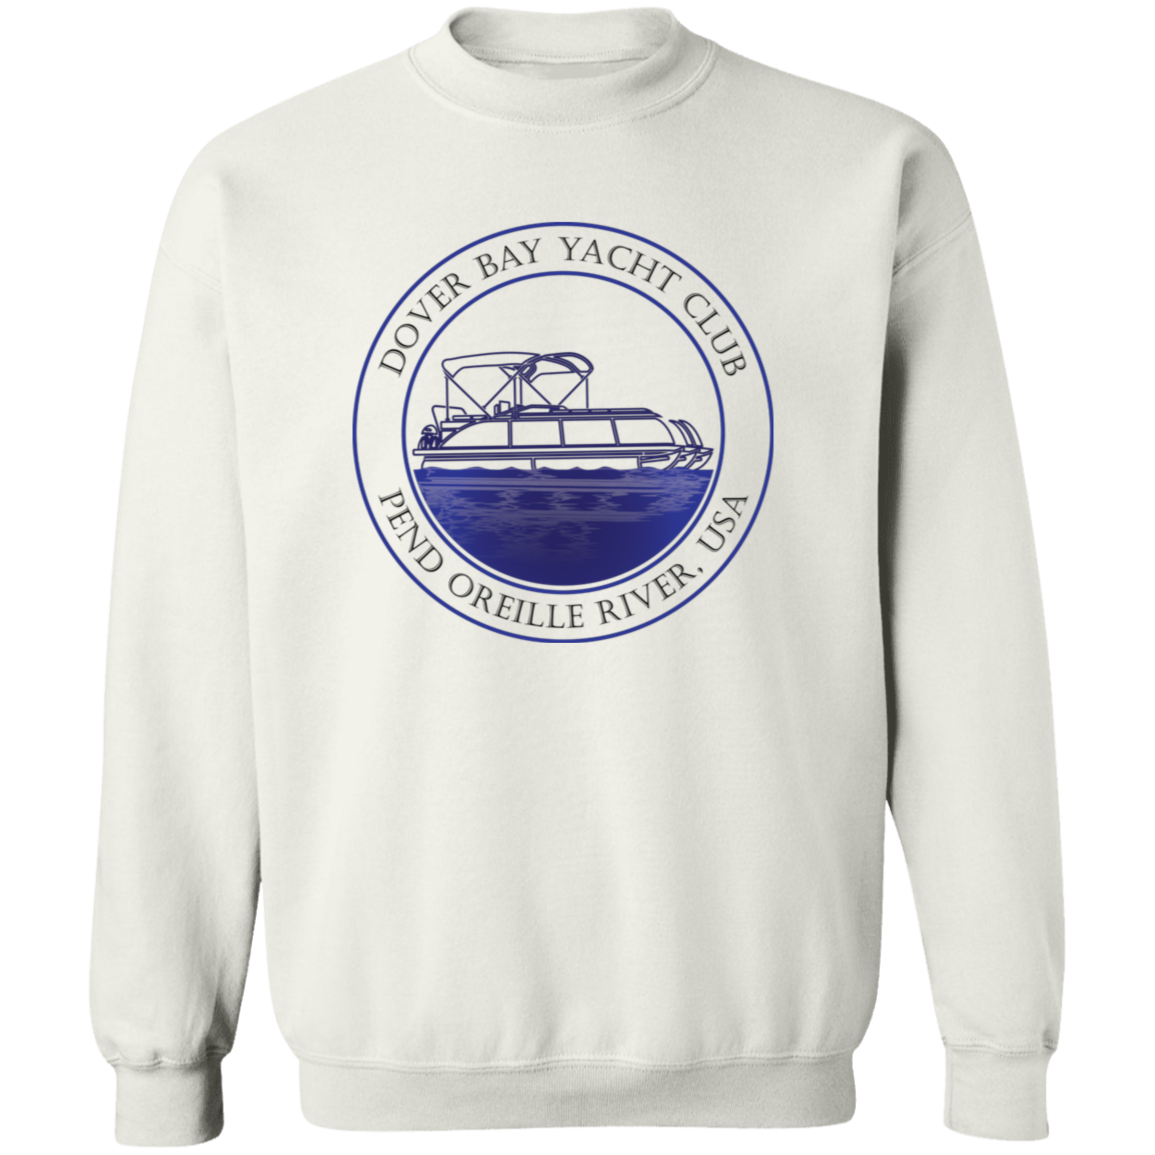 Dover Bay Yacht Club - Sweatshirt